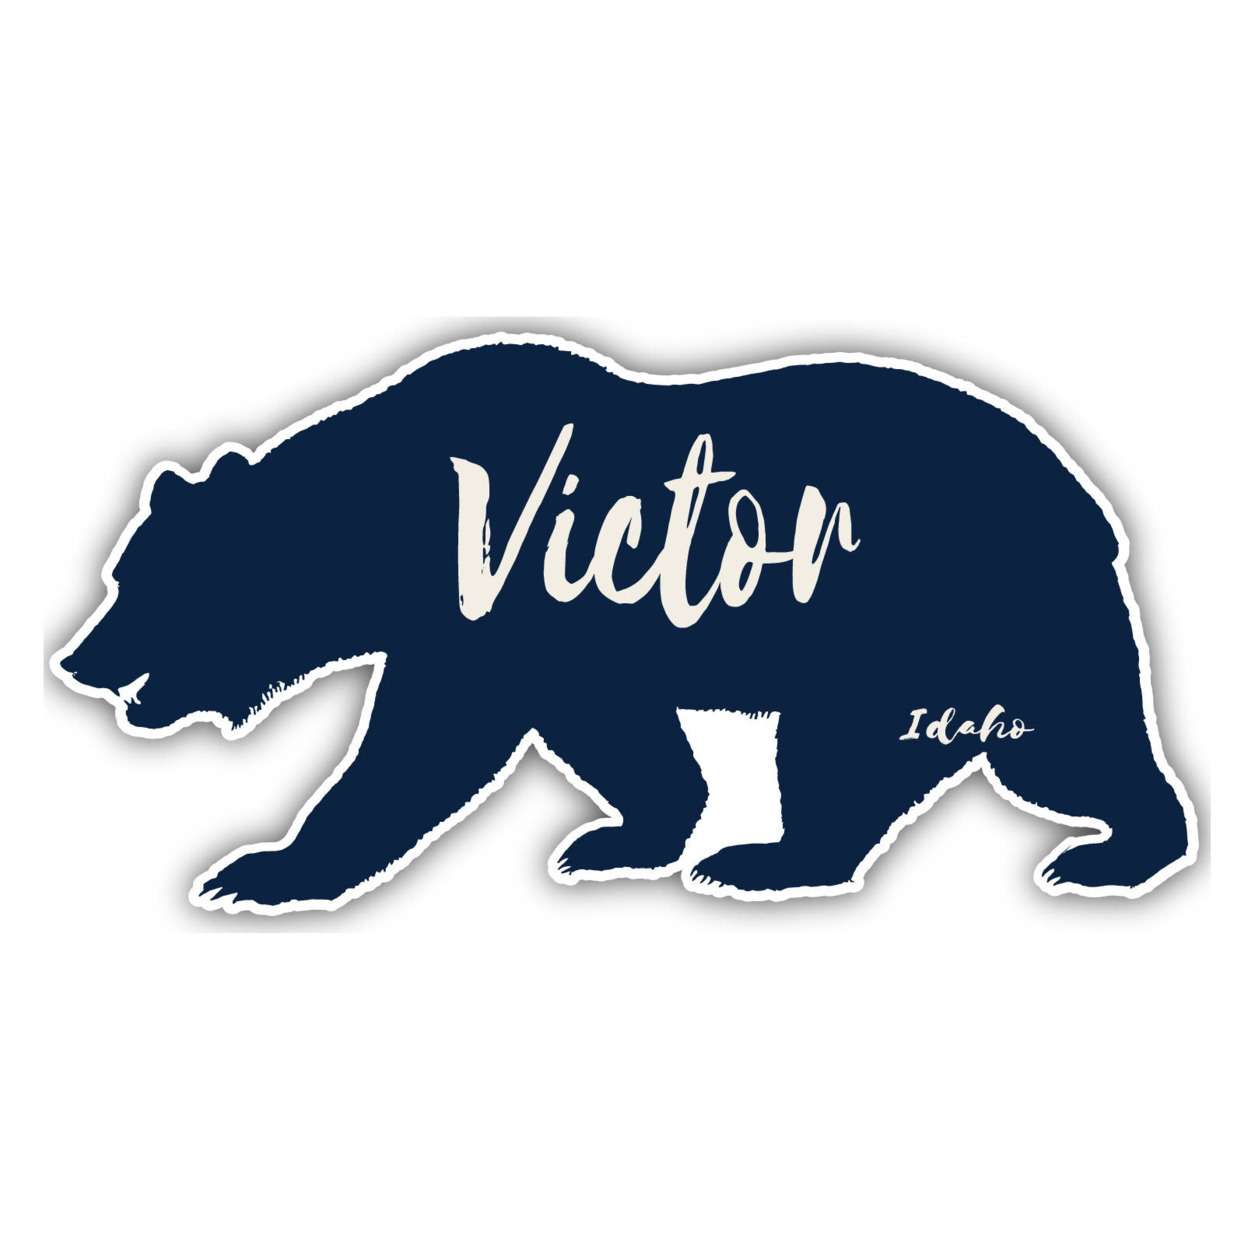 Victor Idaho Souvenir Decorative Stickers (Choose Theme And Size) - Single Unit, 2-Inch, Bear